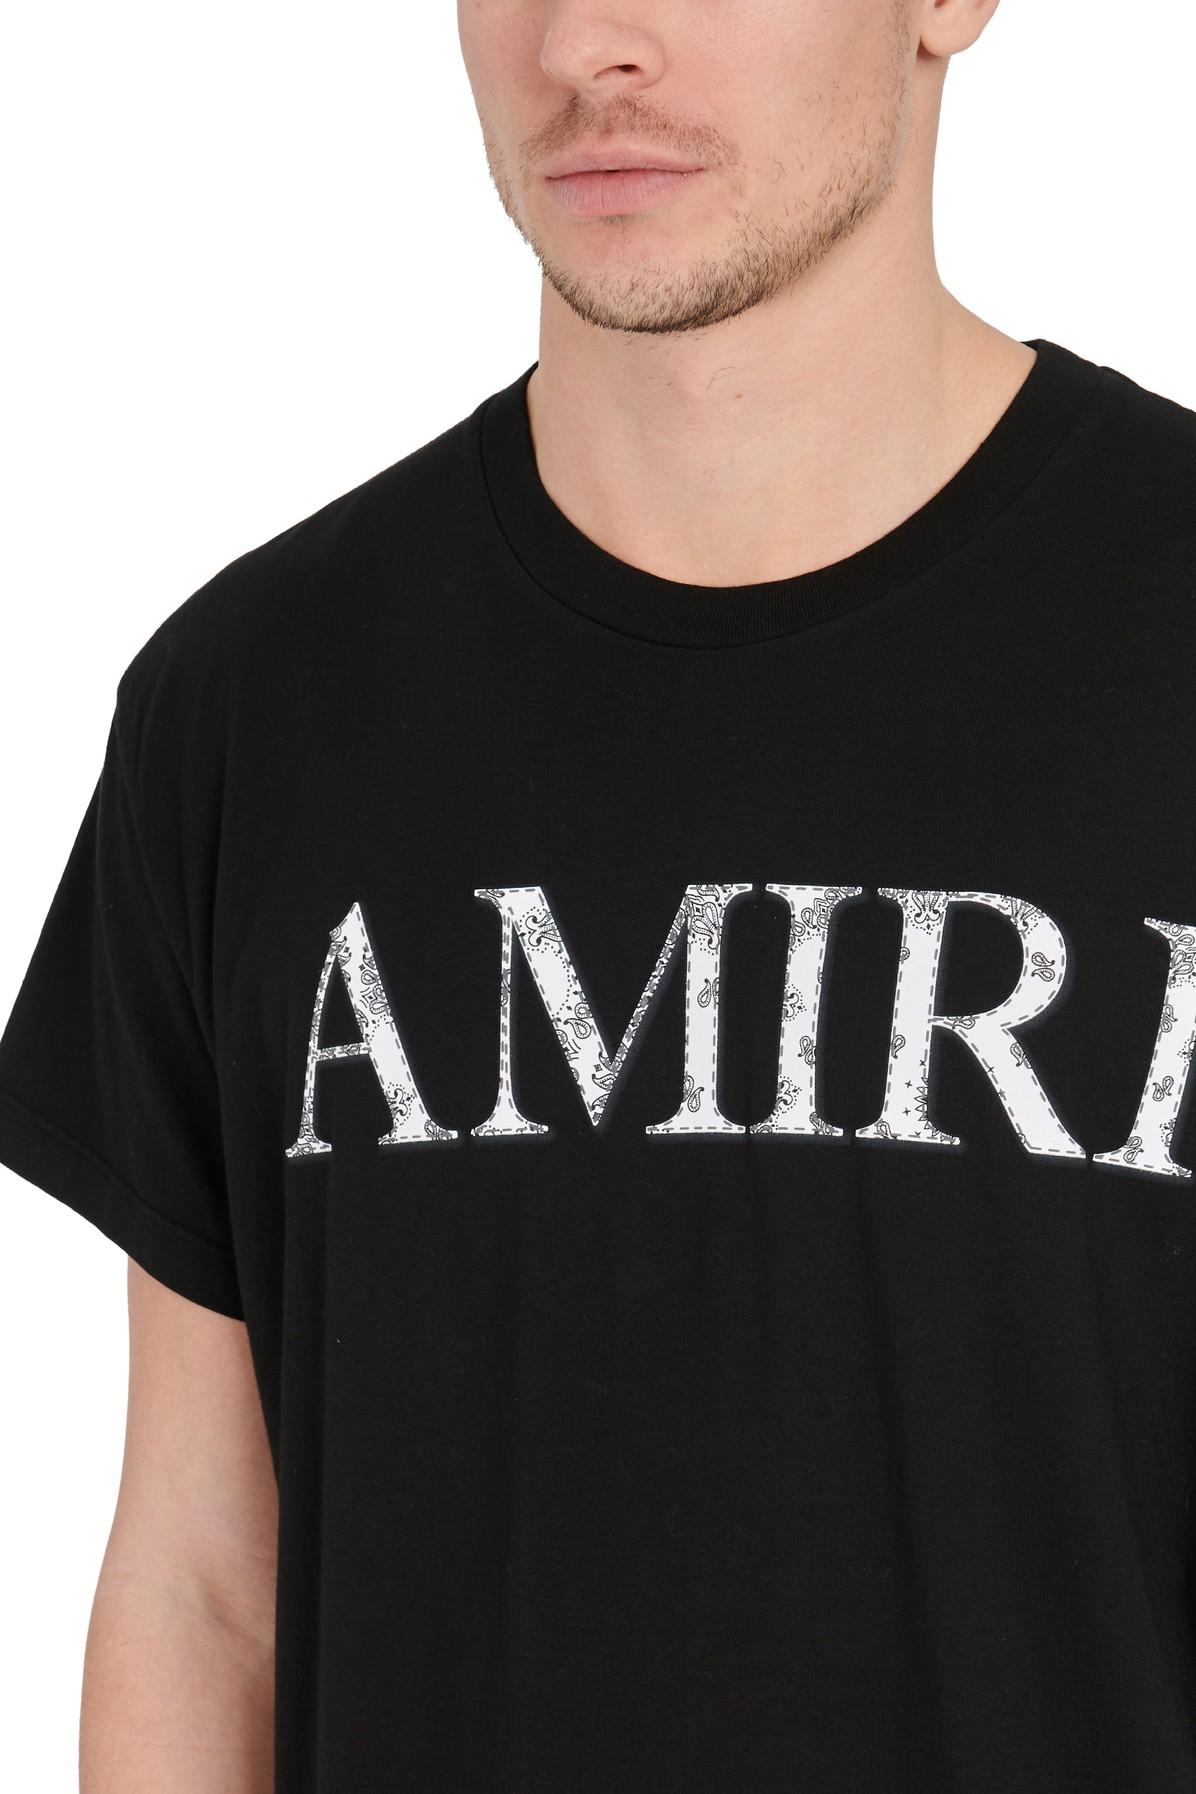 【AMIRI】 amiriロゴTシャツ - materiaisjr.com.br